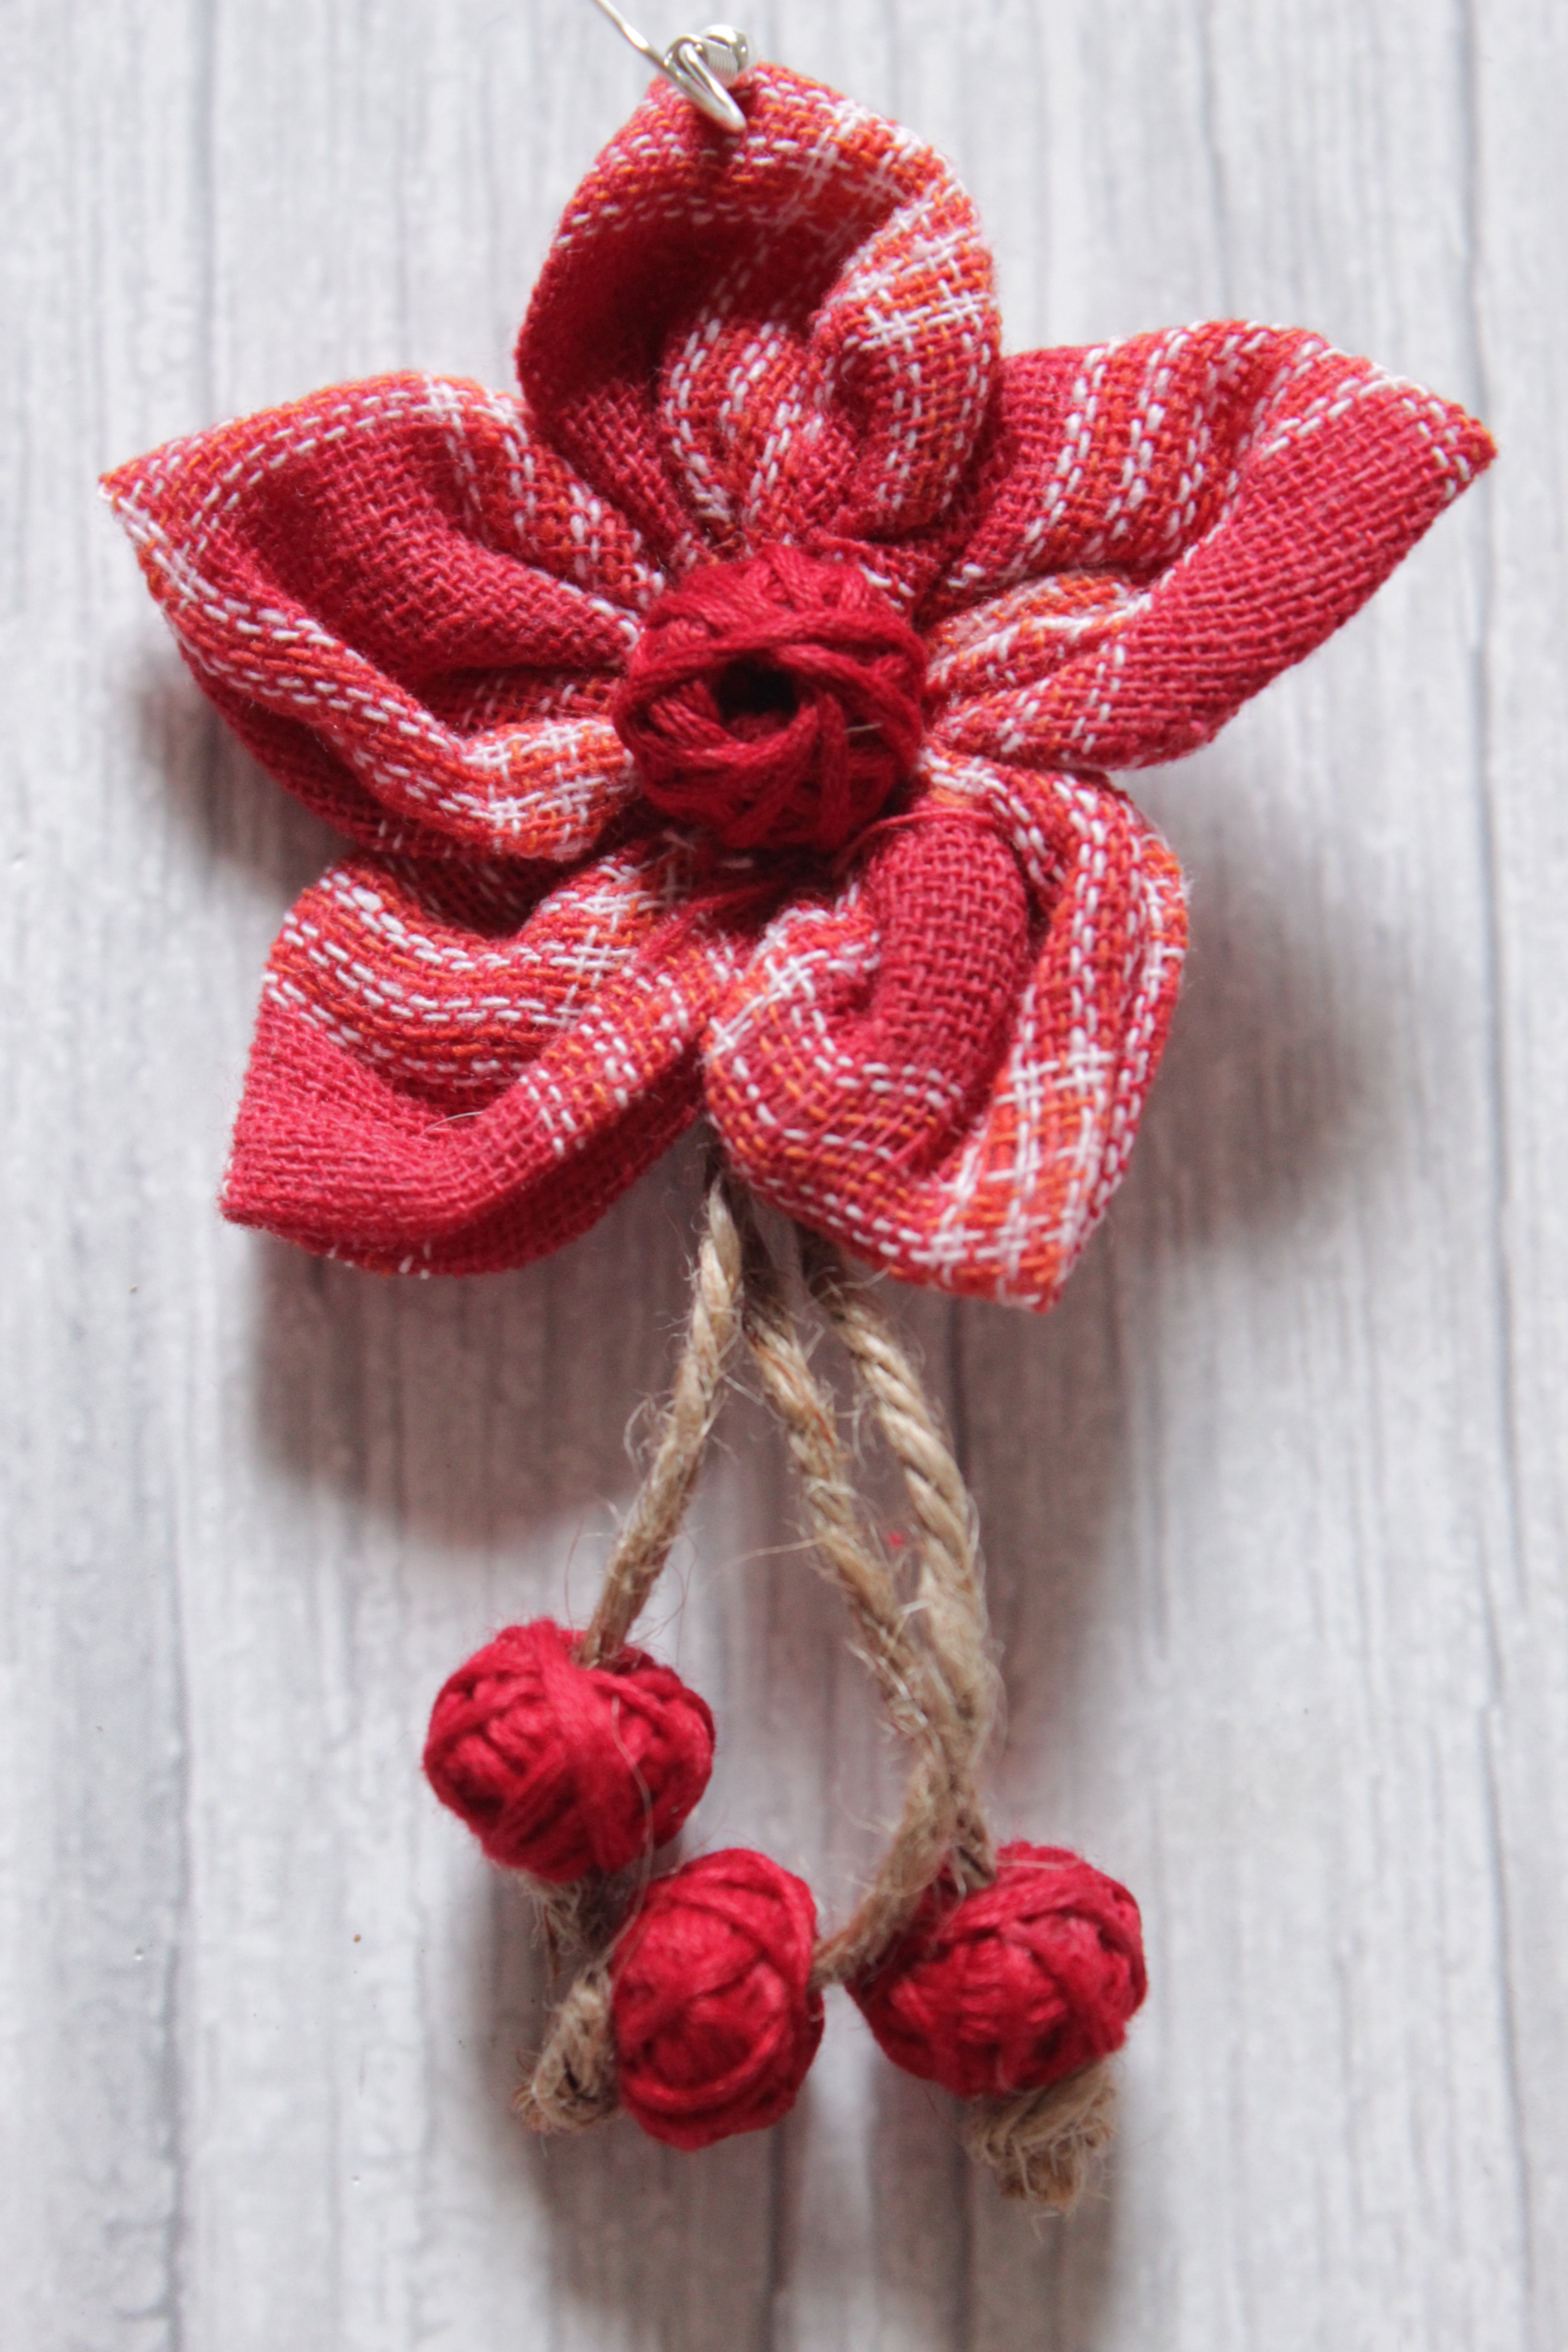 Flower Motif Handcrafted Fabric Earrings with Jute Hangings